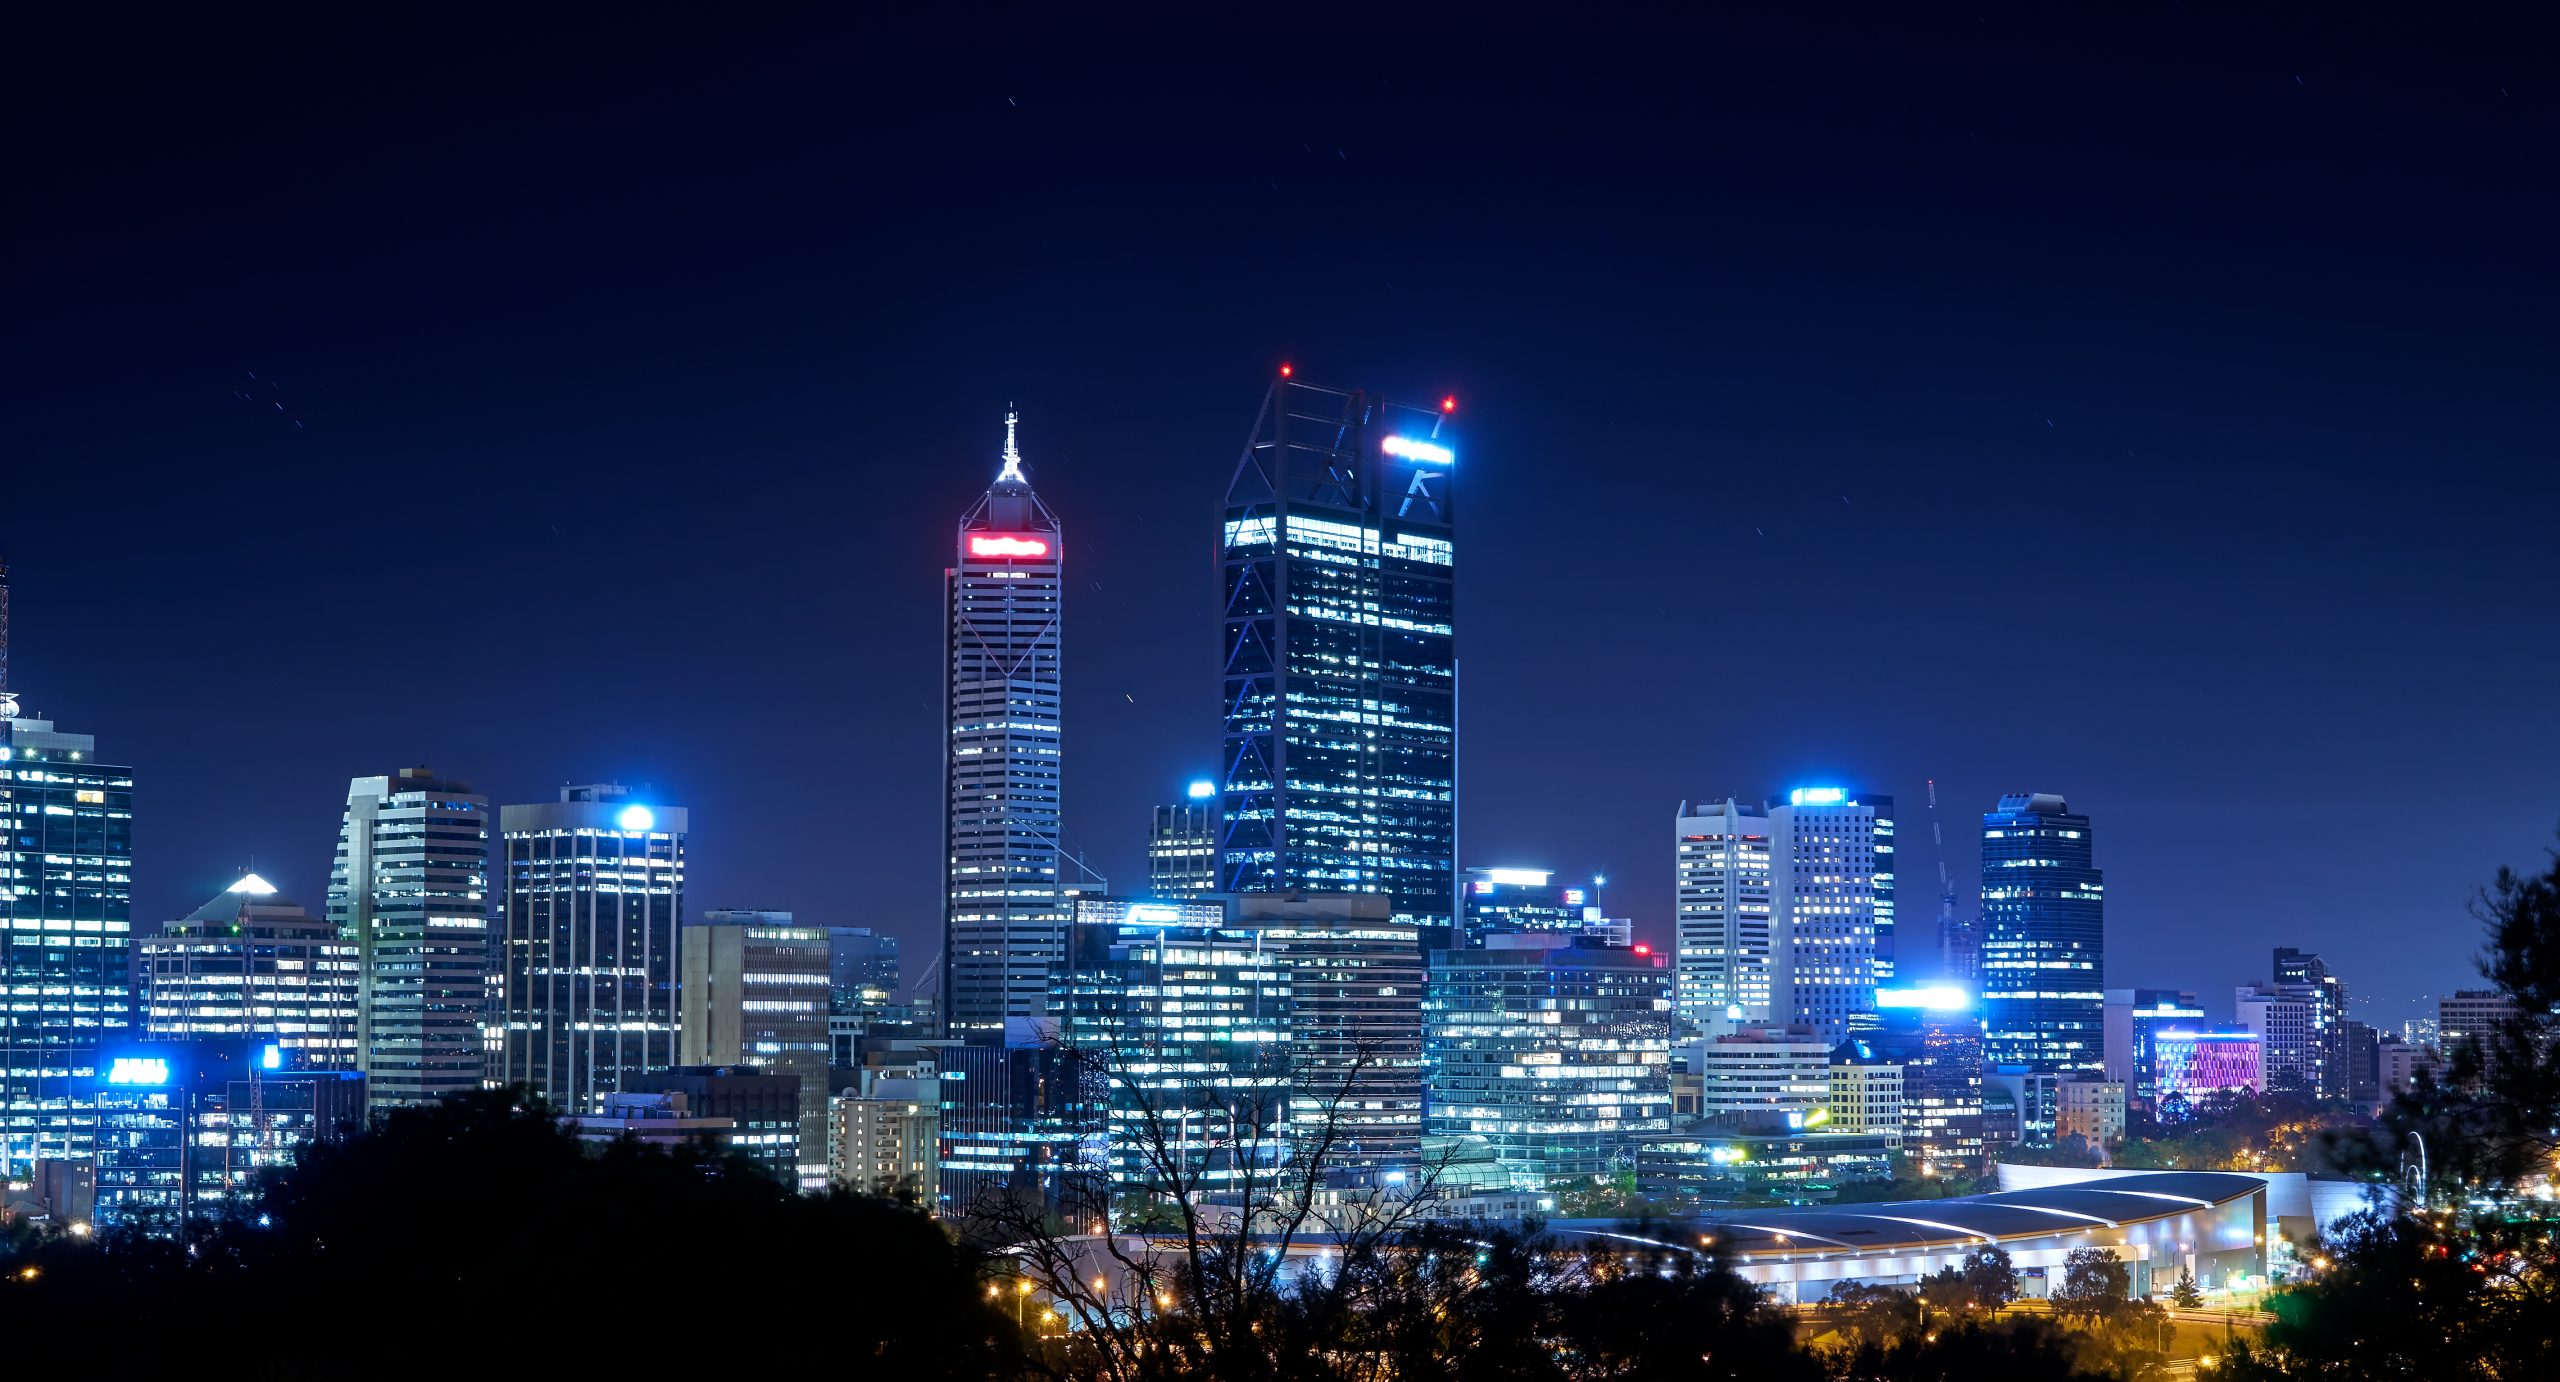 Skyline of Perth